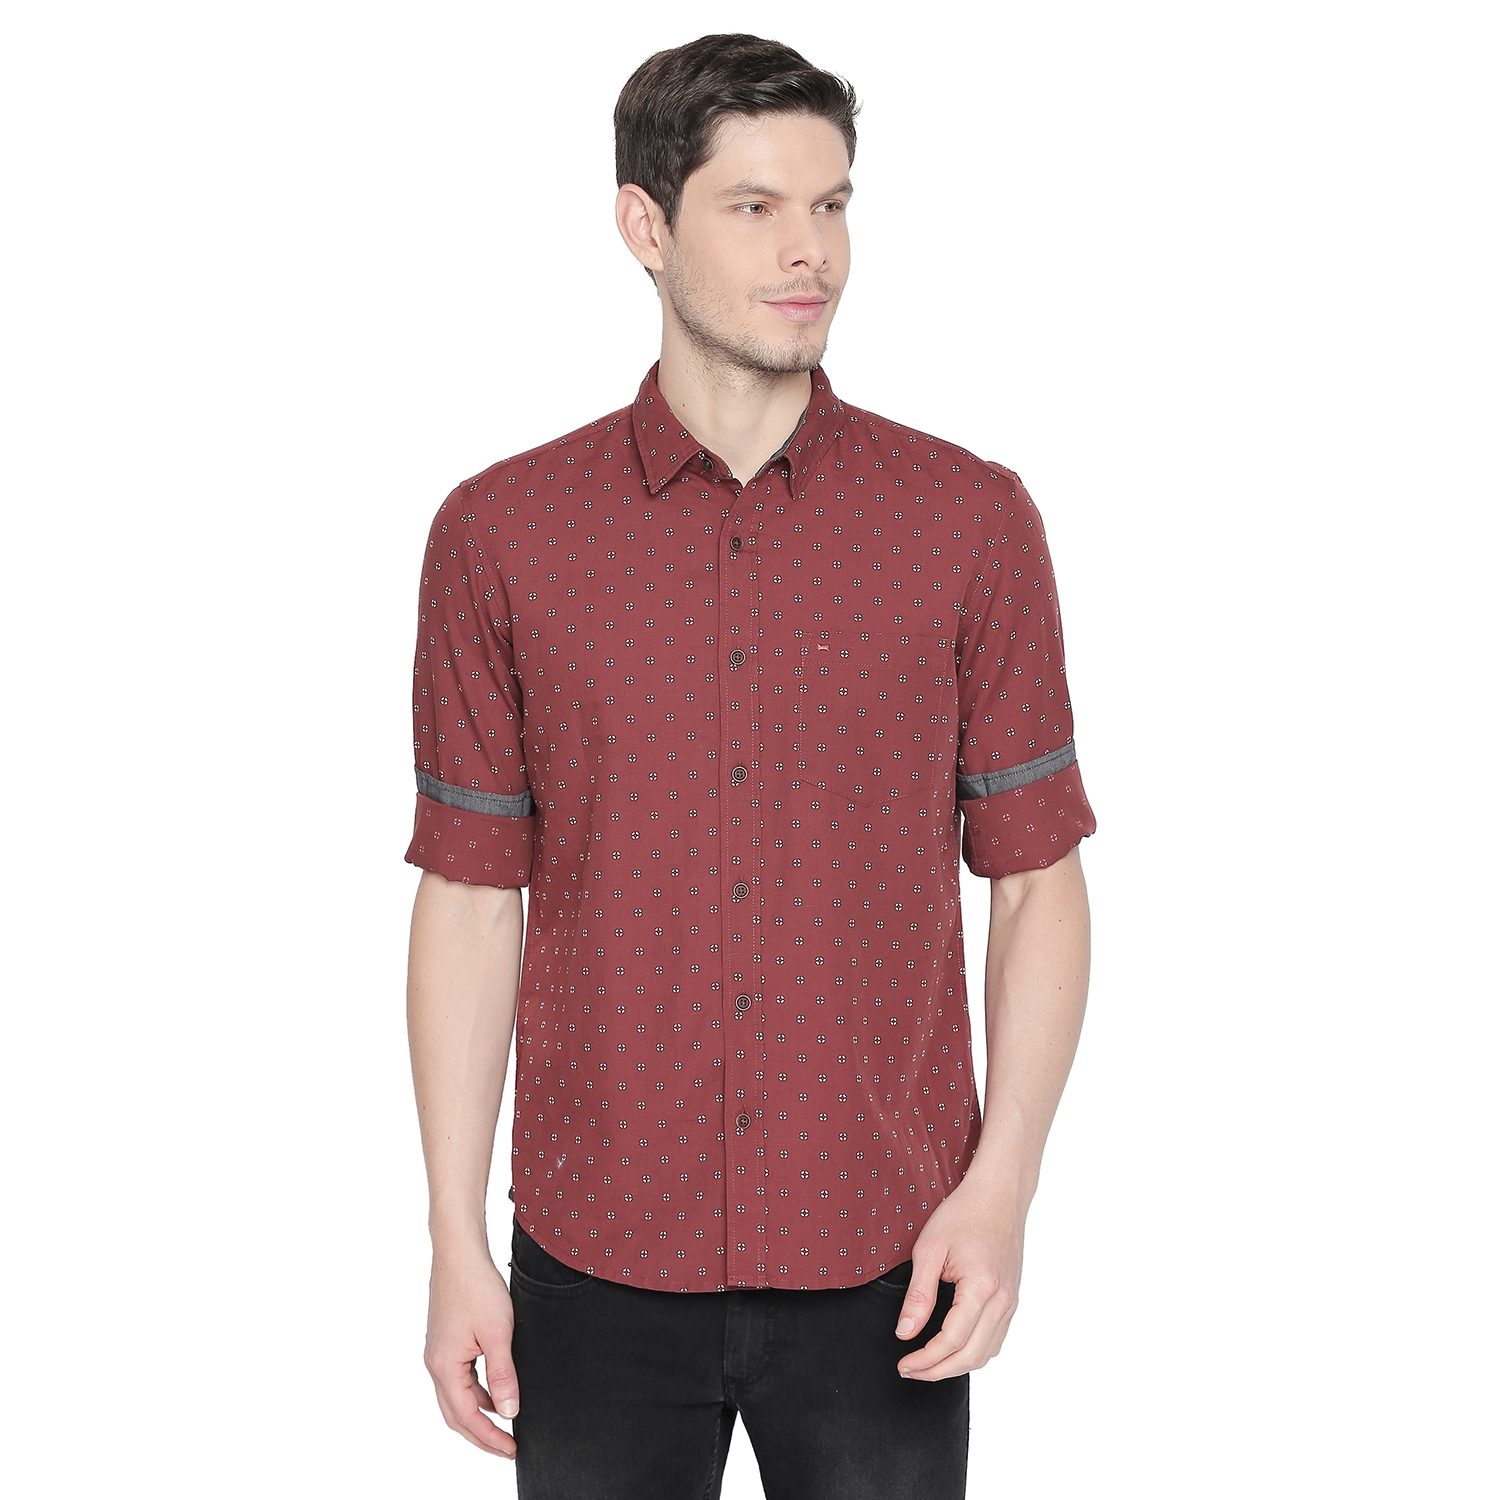 Basics | Basics Slim Fit Red Ochre Printed Shirt